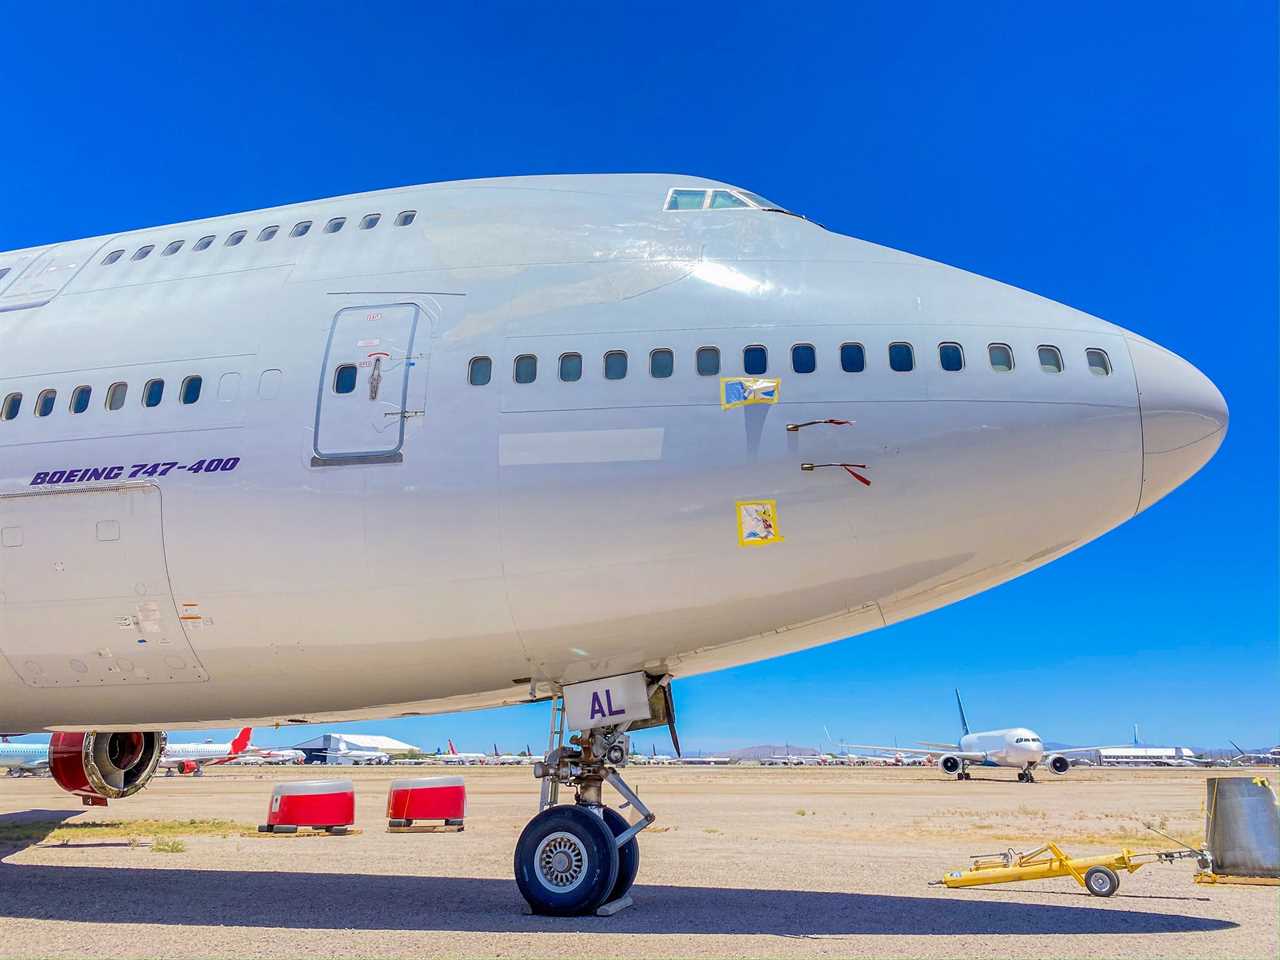 A stored aircraft in Pinal Airpark in Marana, Arizona — Pinal Airpark Tour 2021